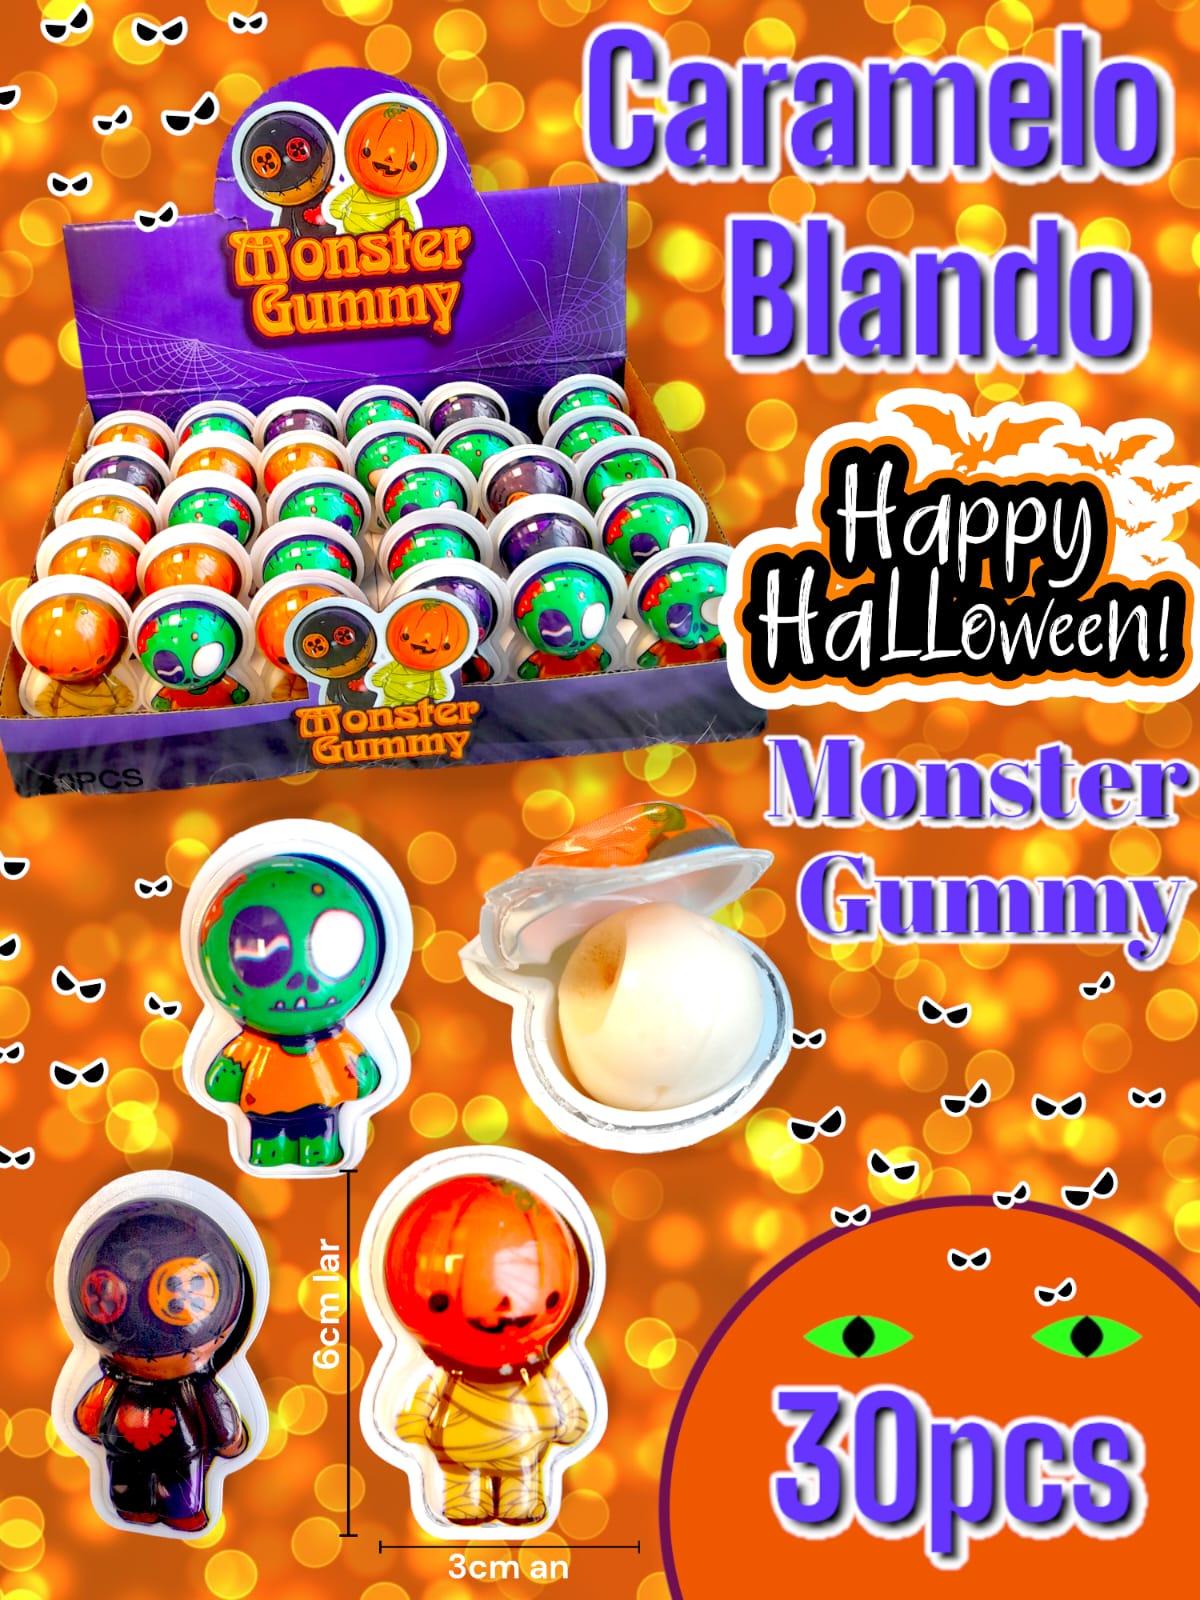 Caramelo Blando MONSTER GUMMY Happy Halloween 